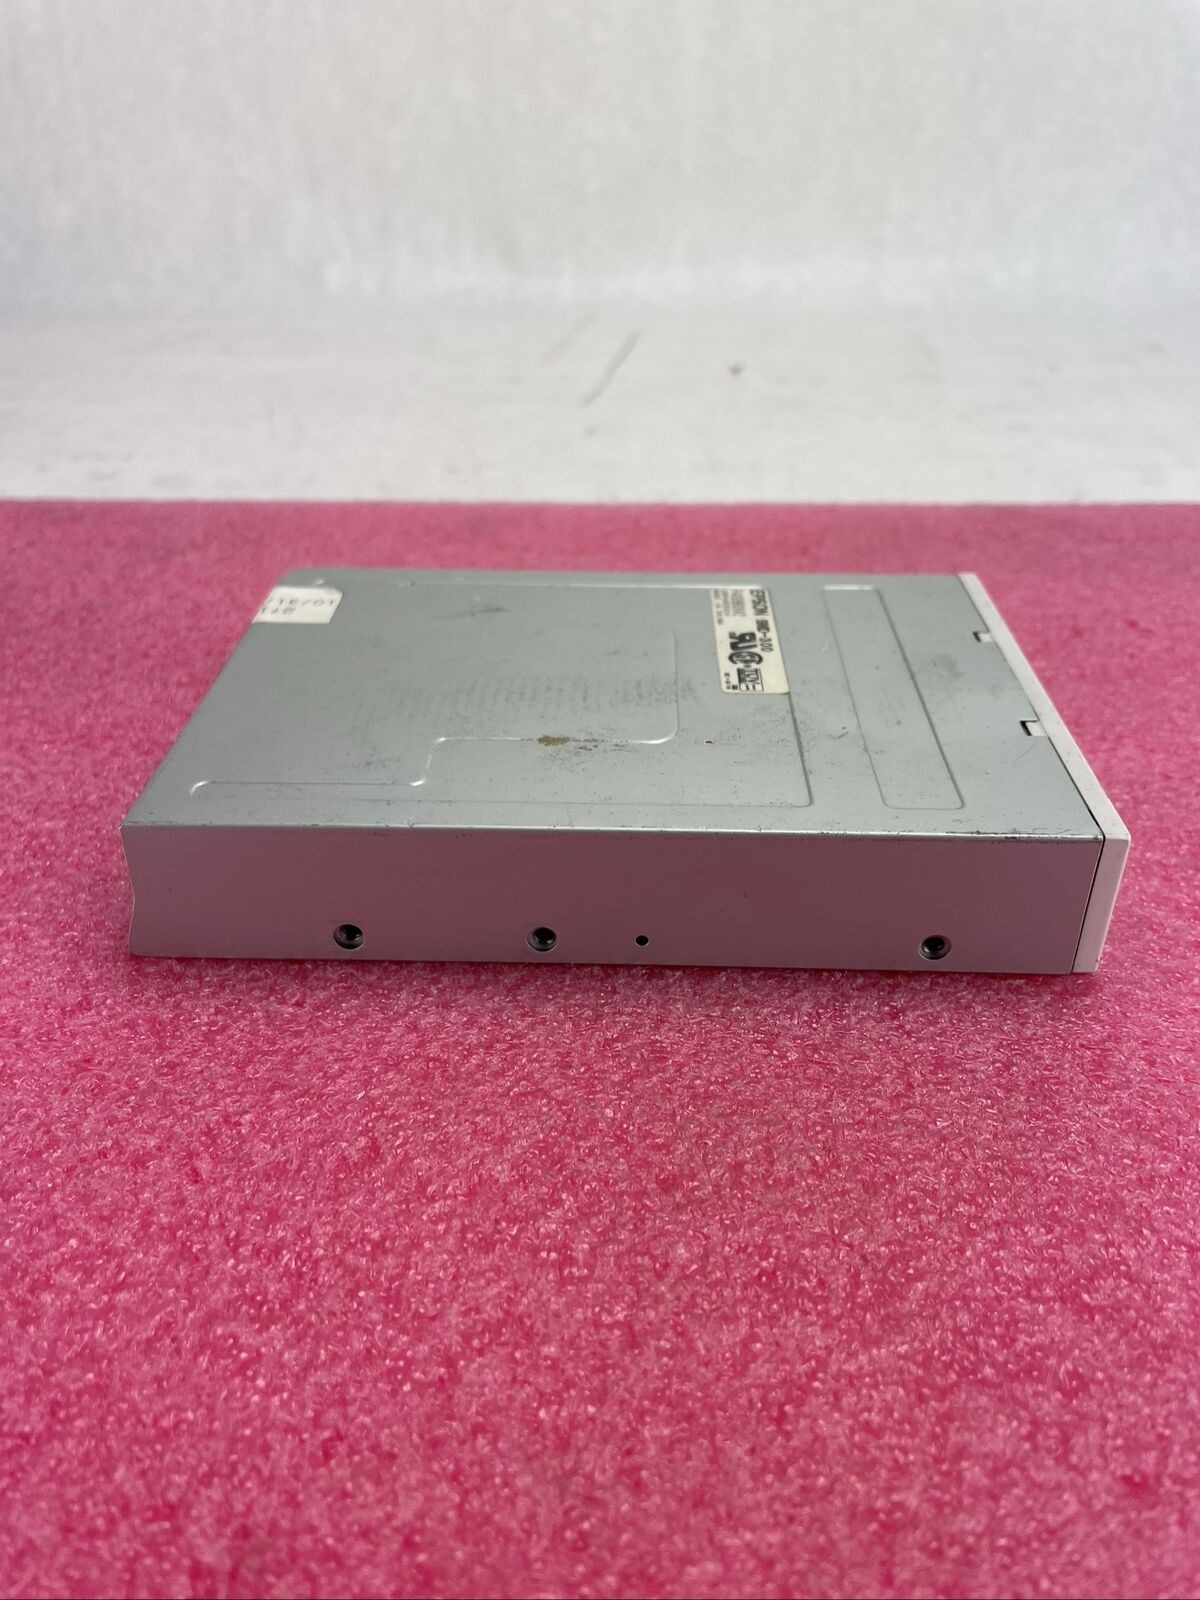 Vintage Epson Gateway SMD-300 Internal 3.5-Inch 1.44MB Floppy Disk Drive